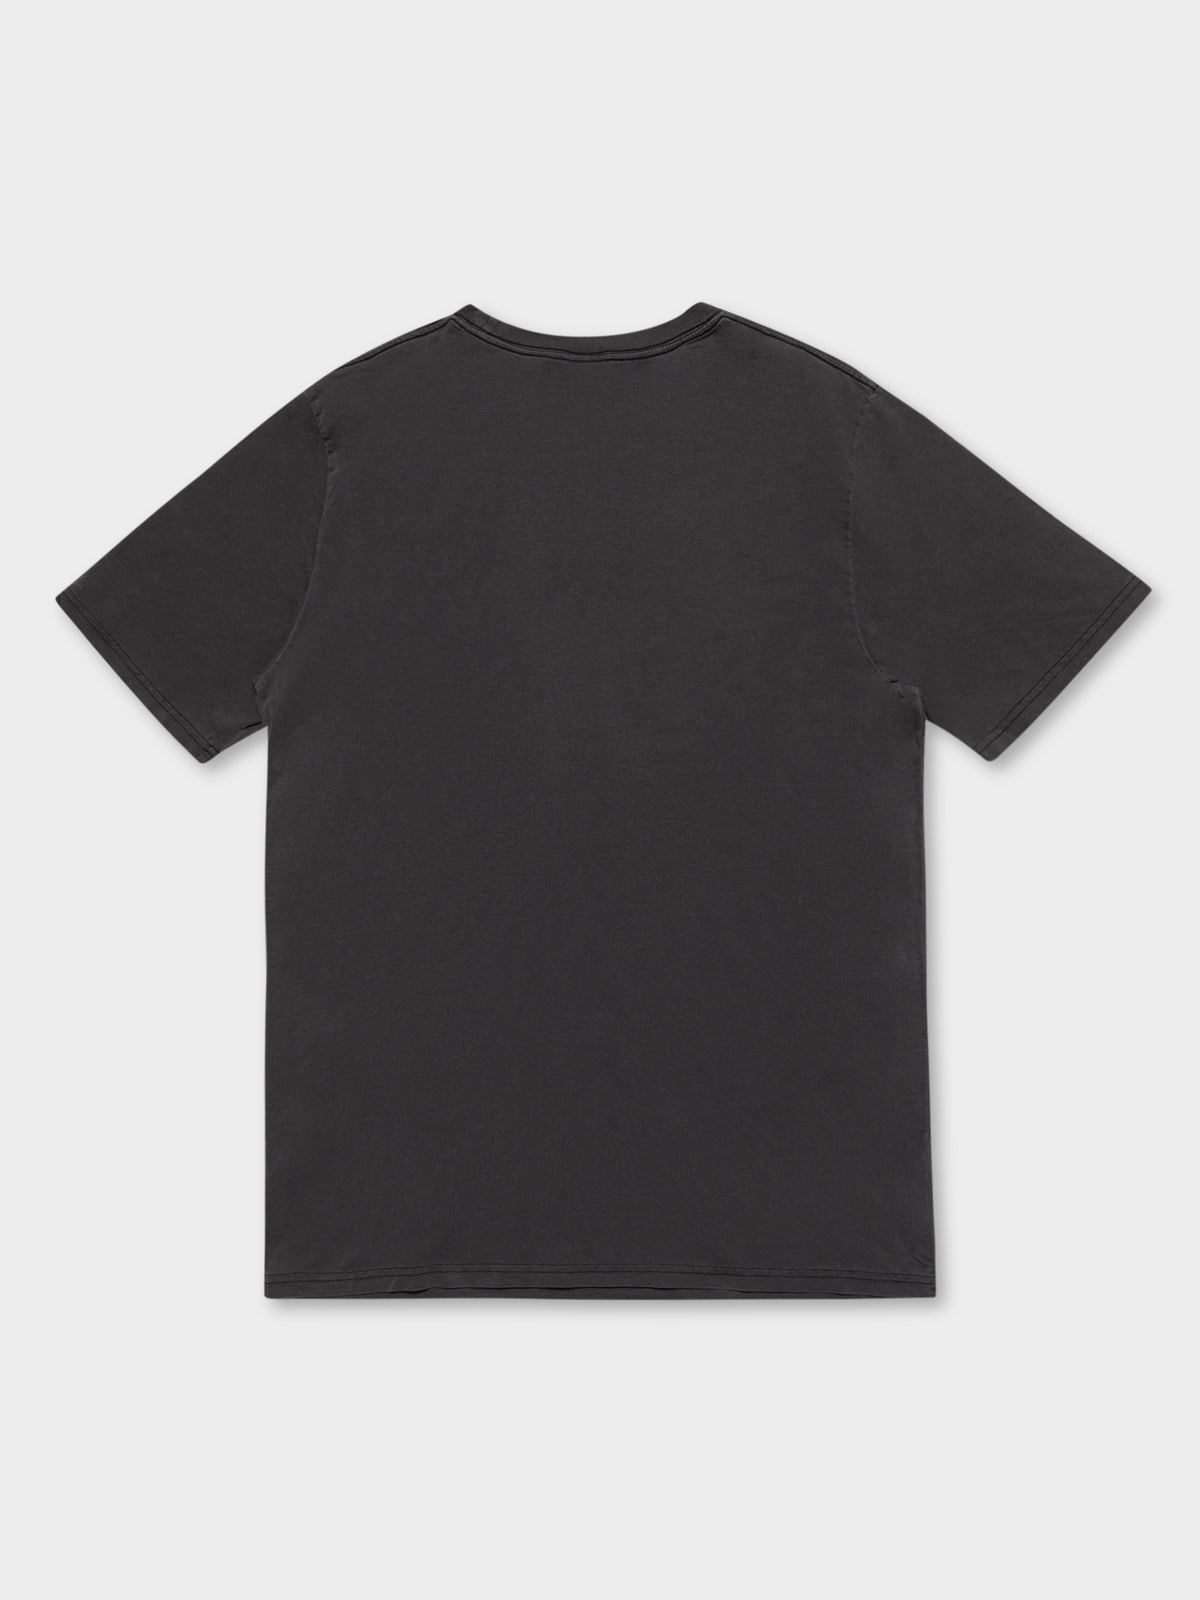 Playboy O T-Shirt in Black